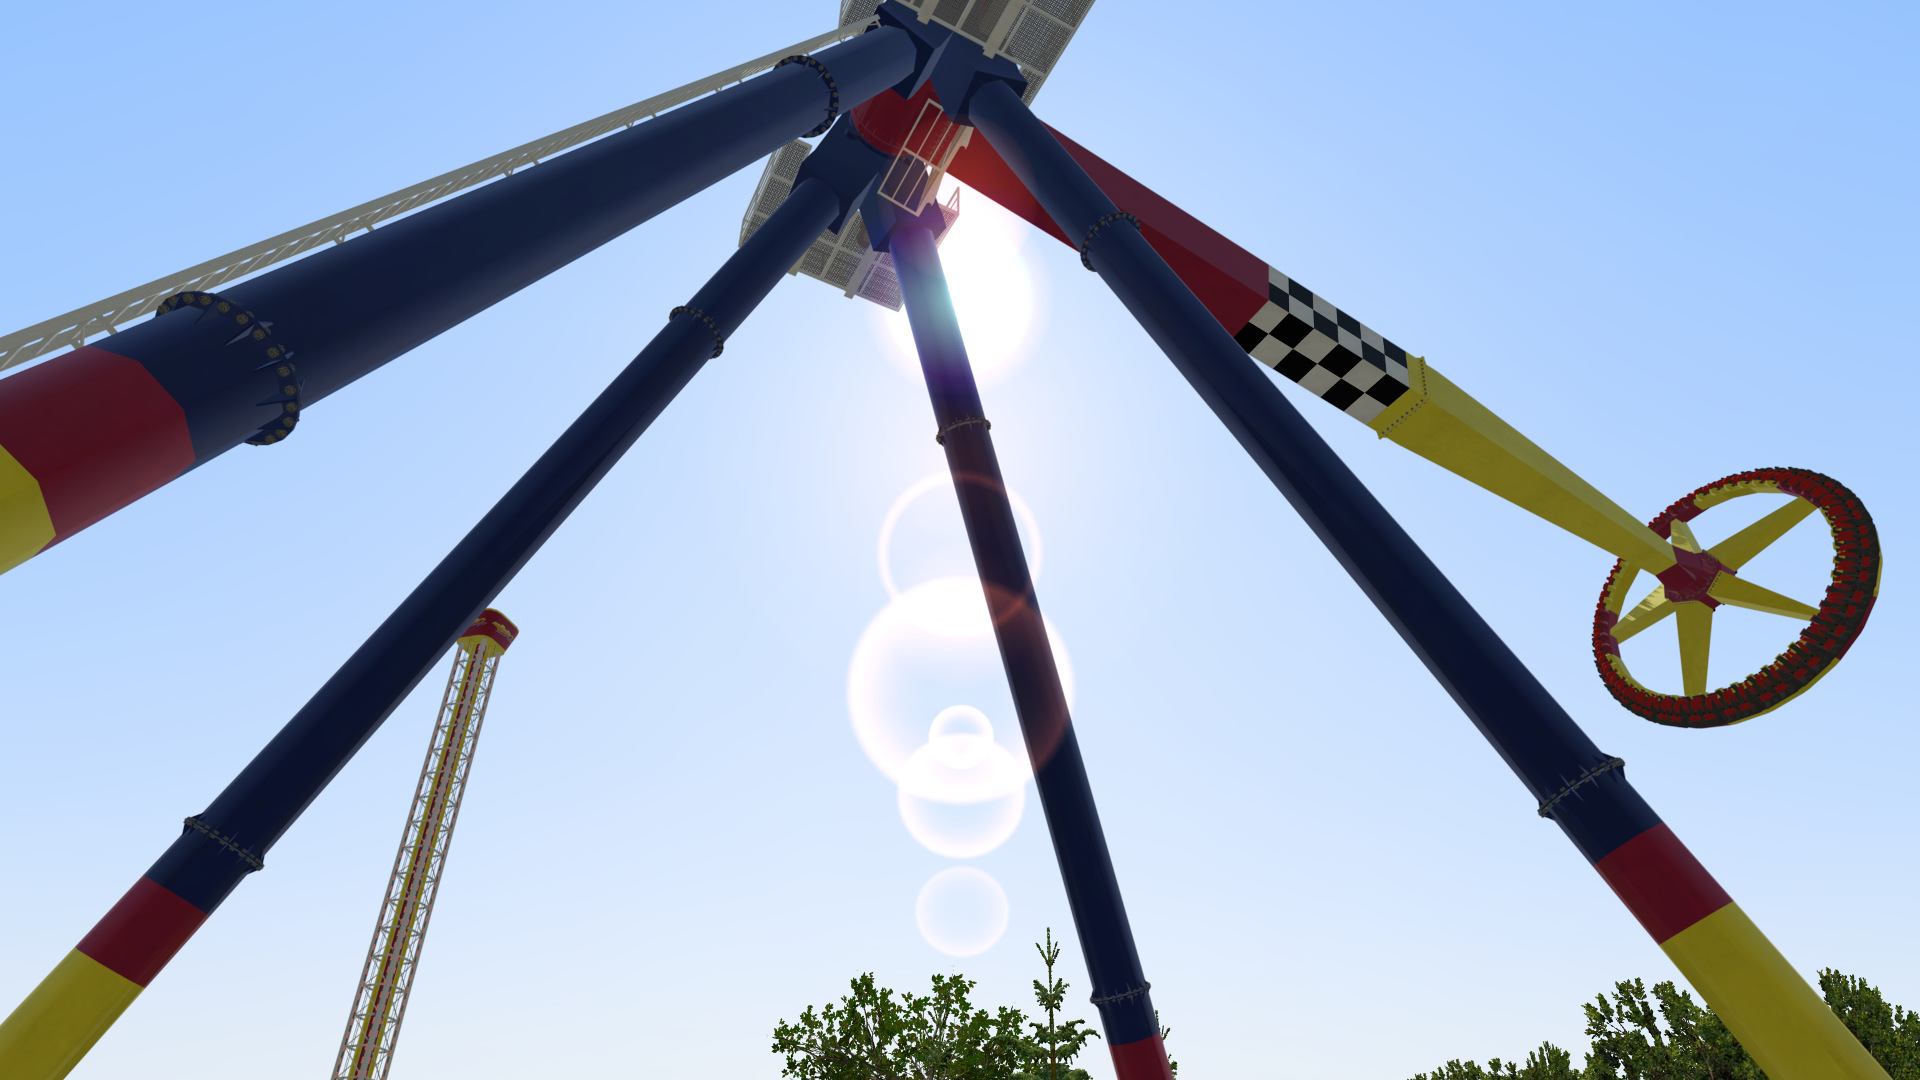 NoLimits 2 Roller Coaster Simulation Free Download